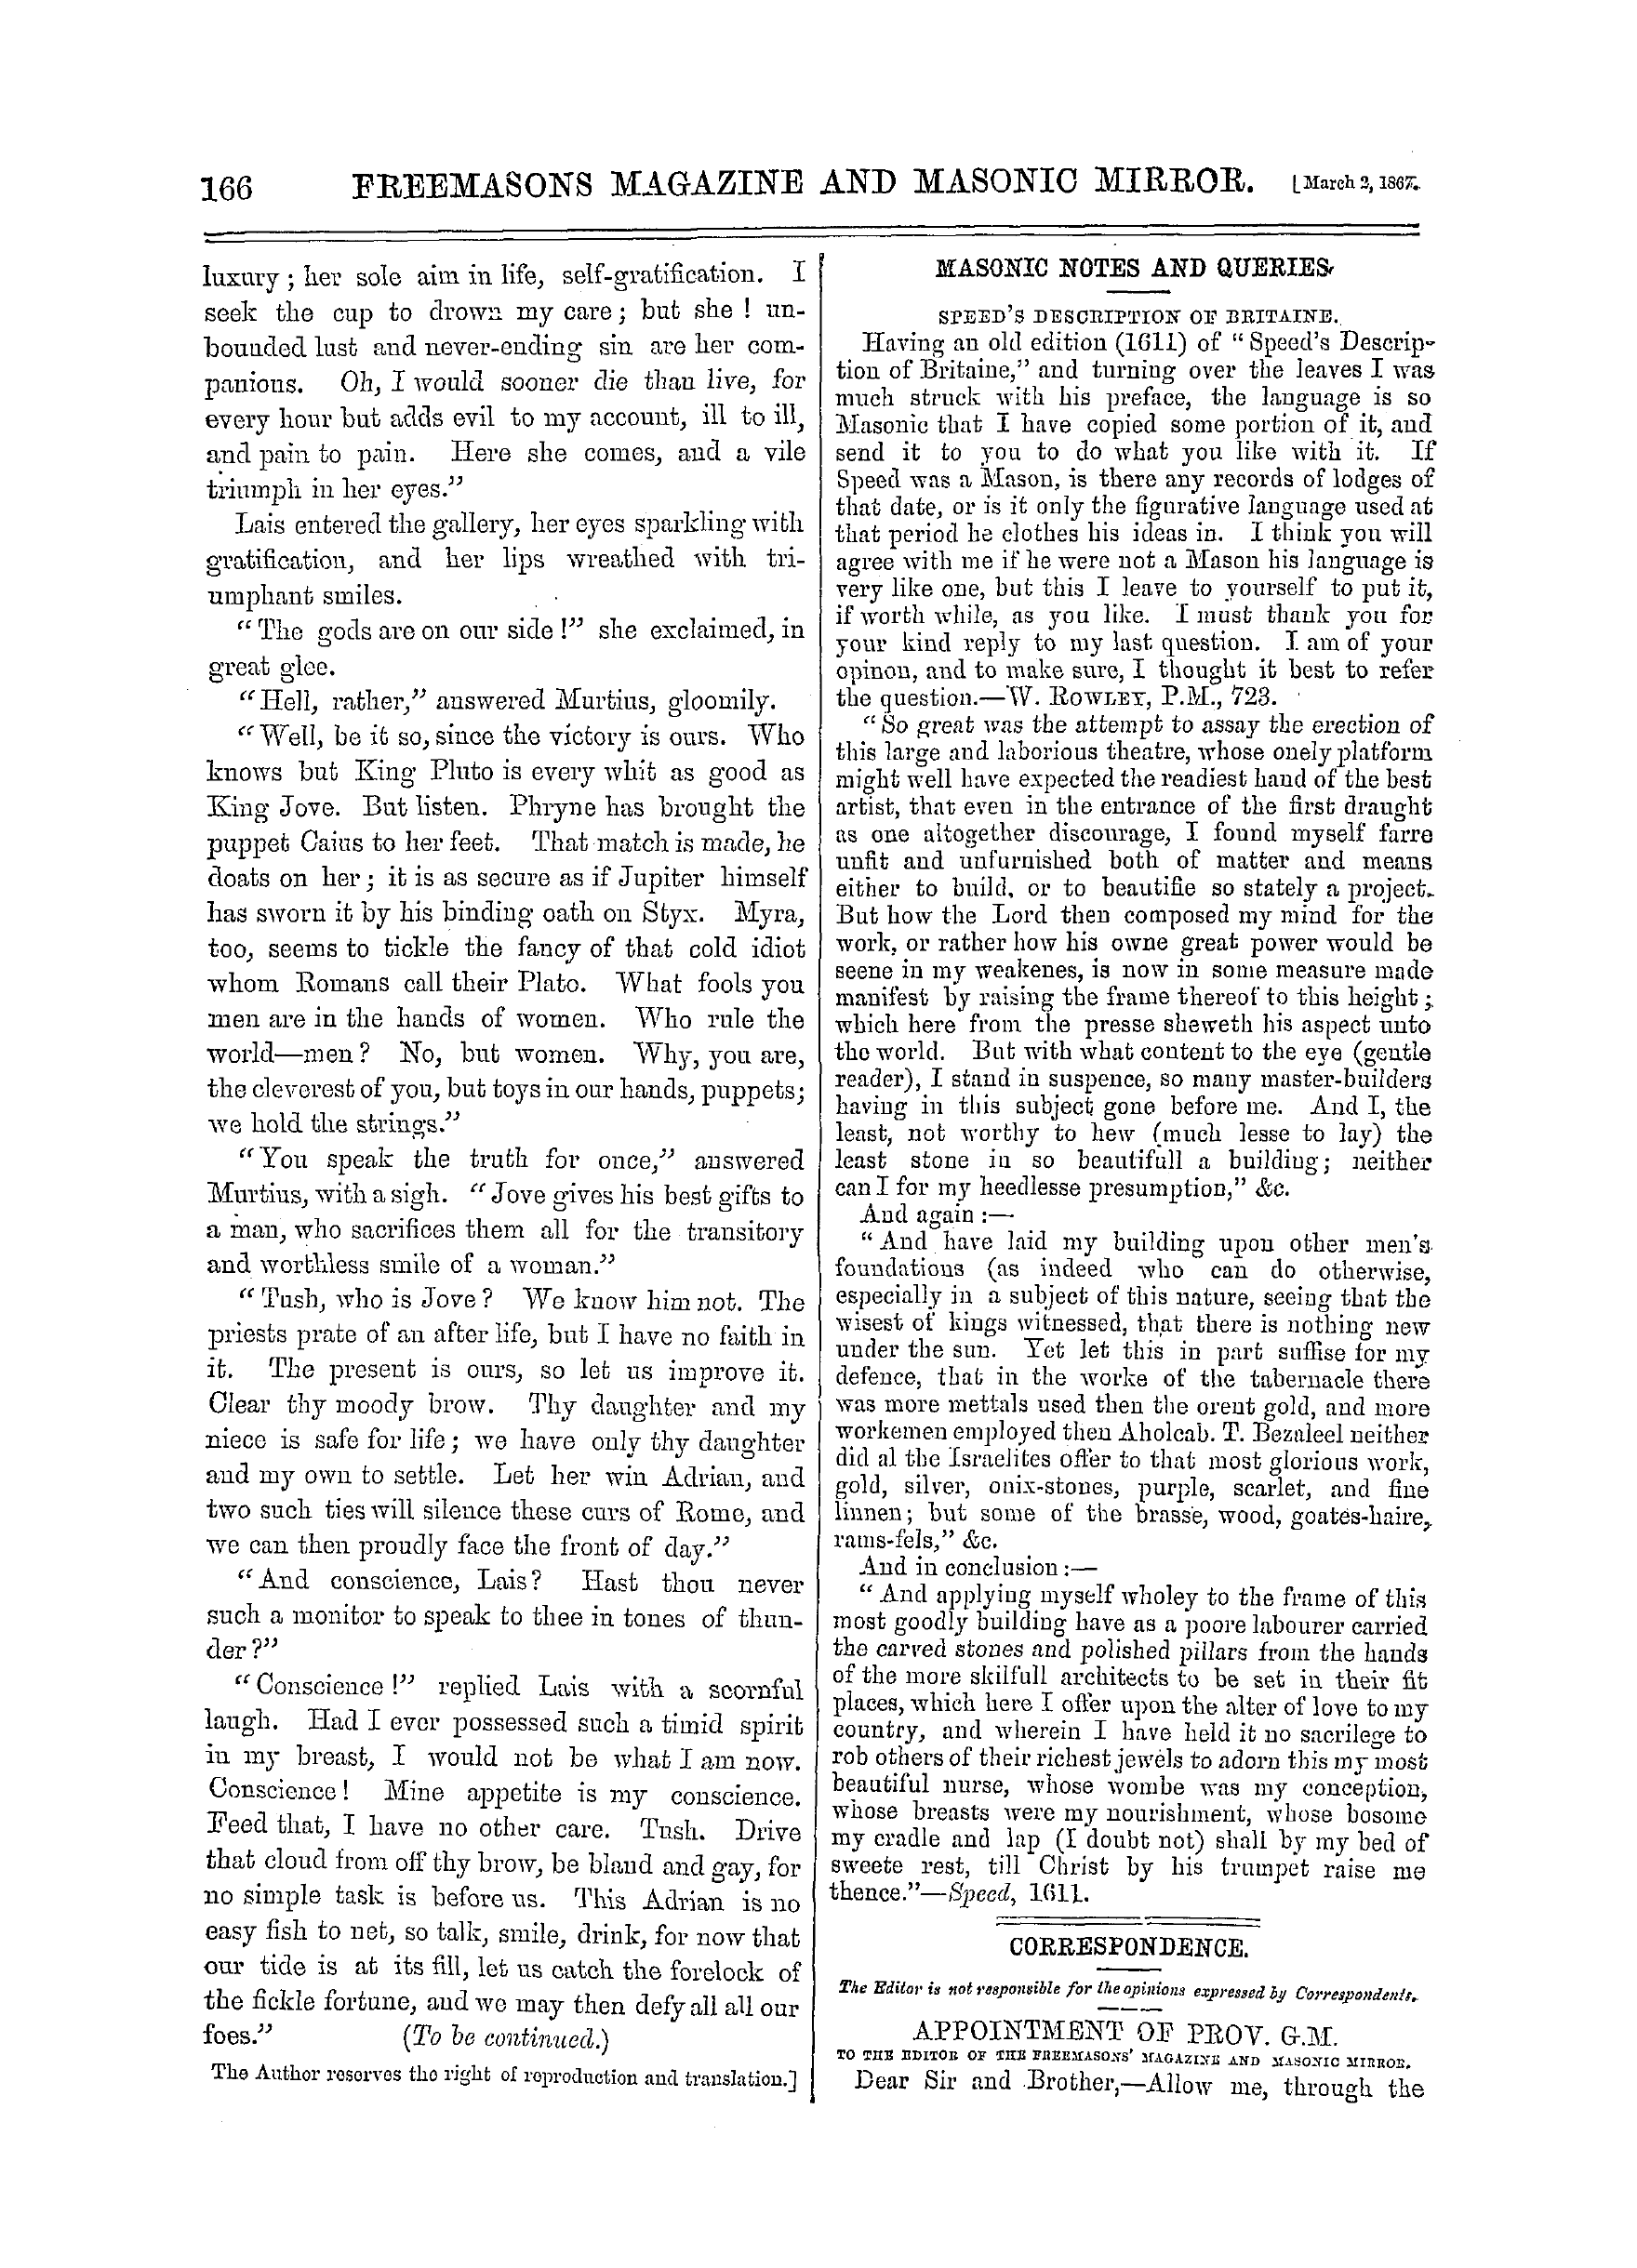 The Freemasons' Monthly Magazine: 1867-03-02 - Correspondence.